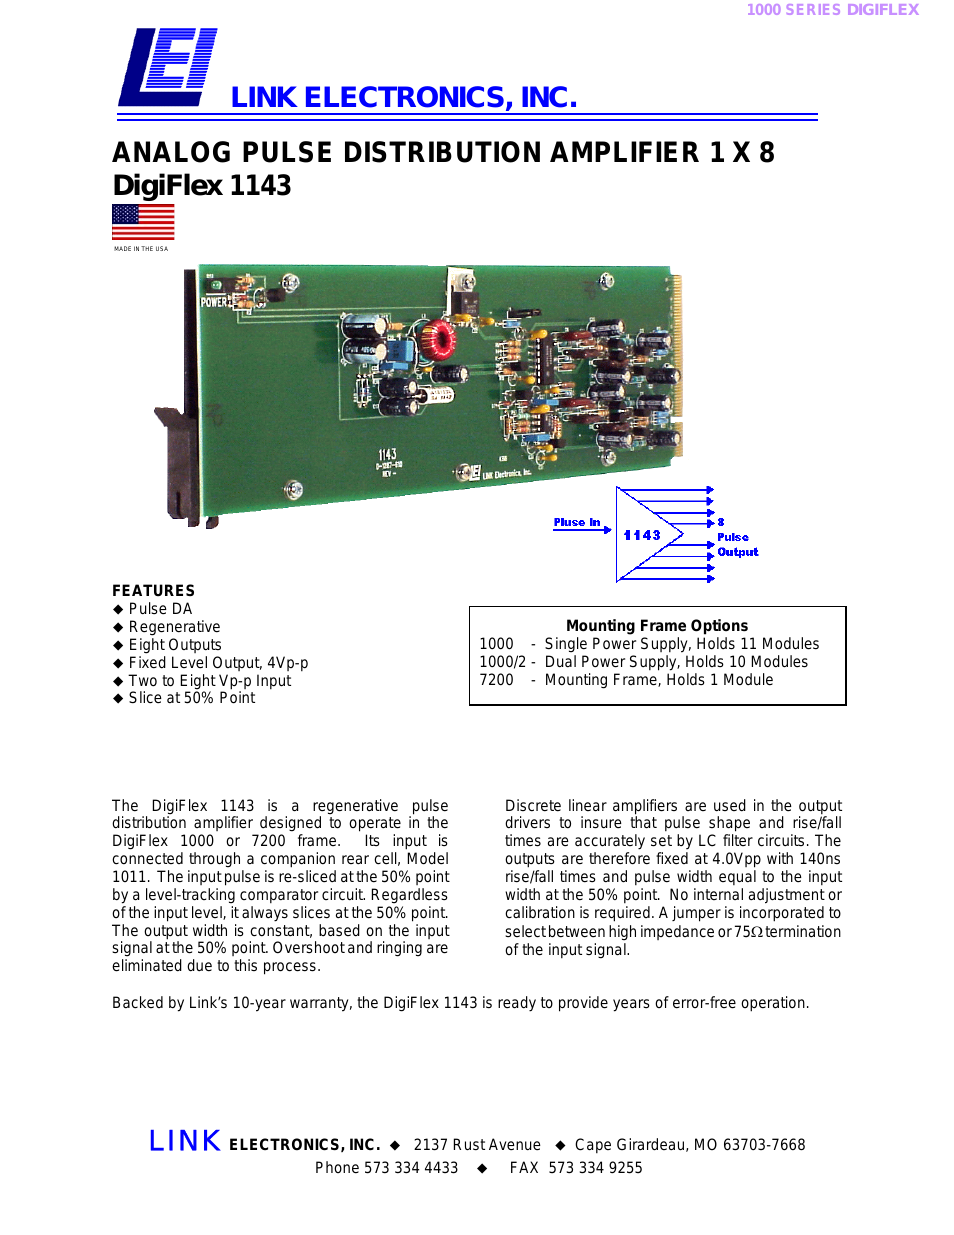 Analog Pulse Distribution Amplifier DigiFlex 1143